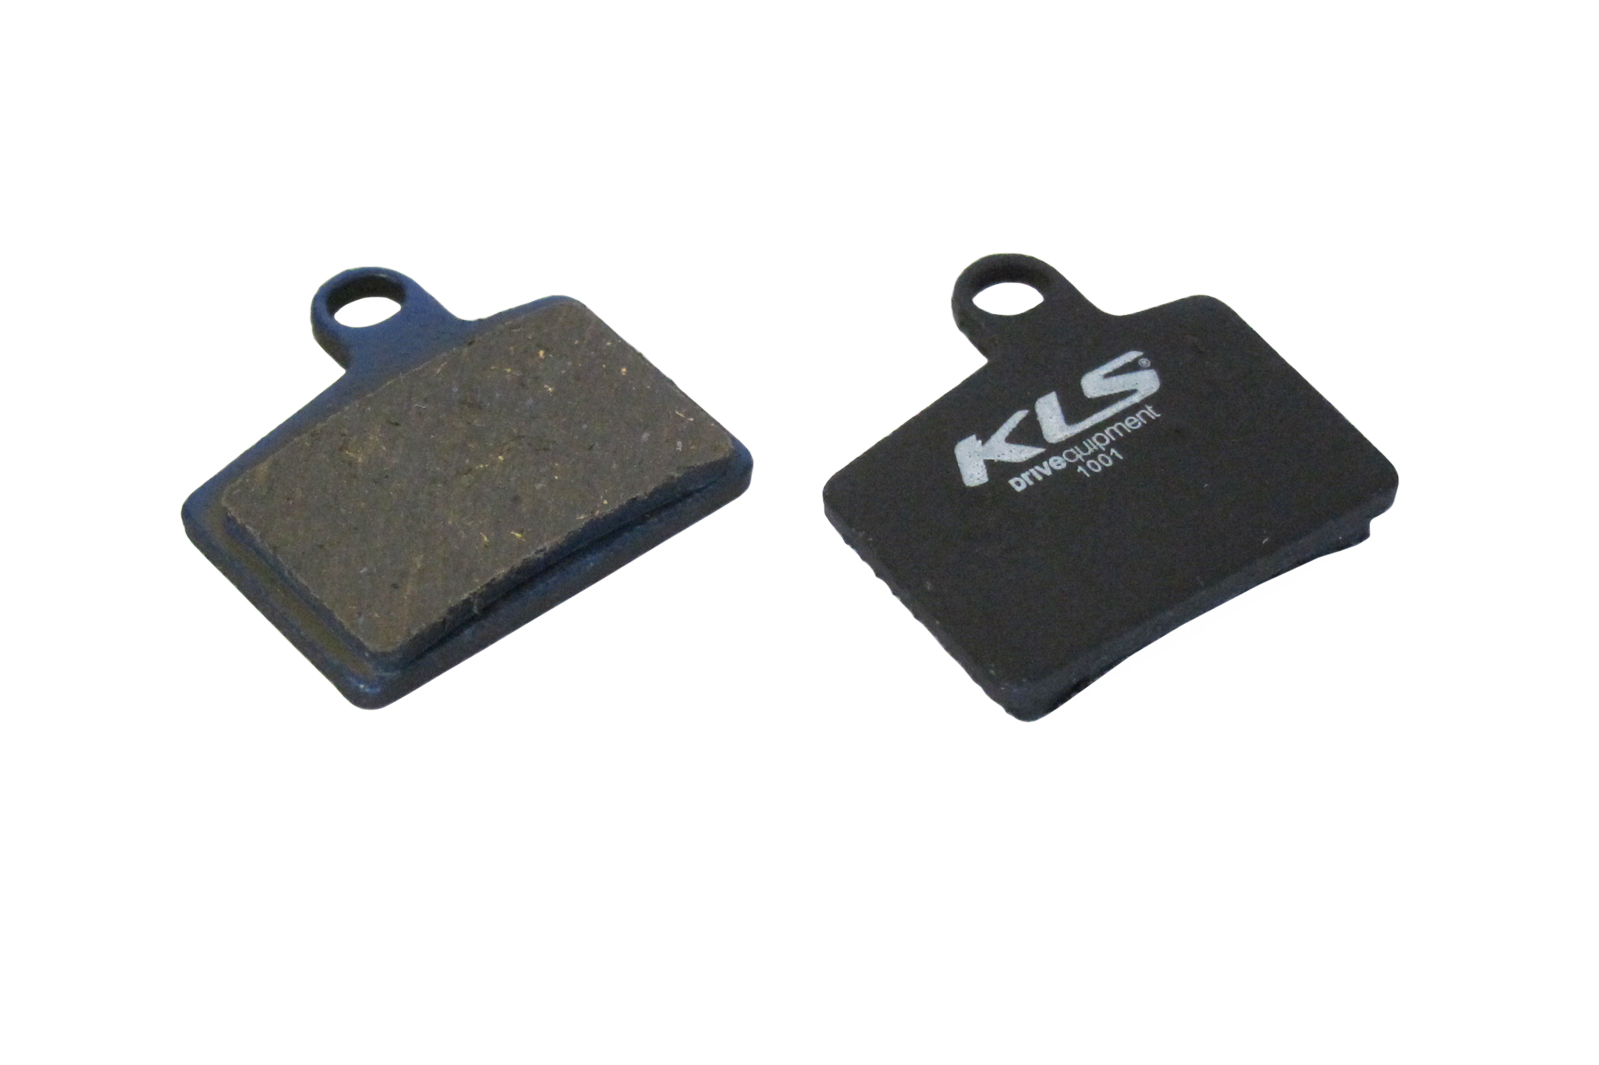 Brzdové platničky KLS D-06, organické (pár)